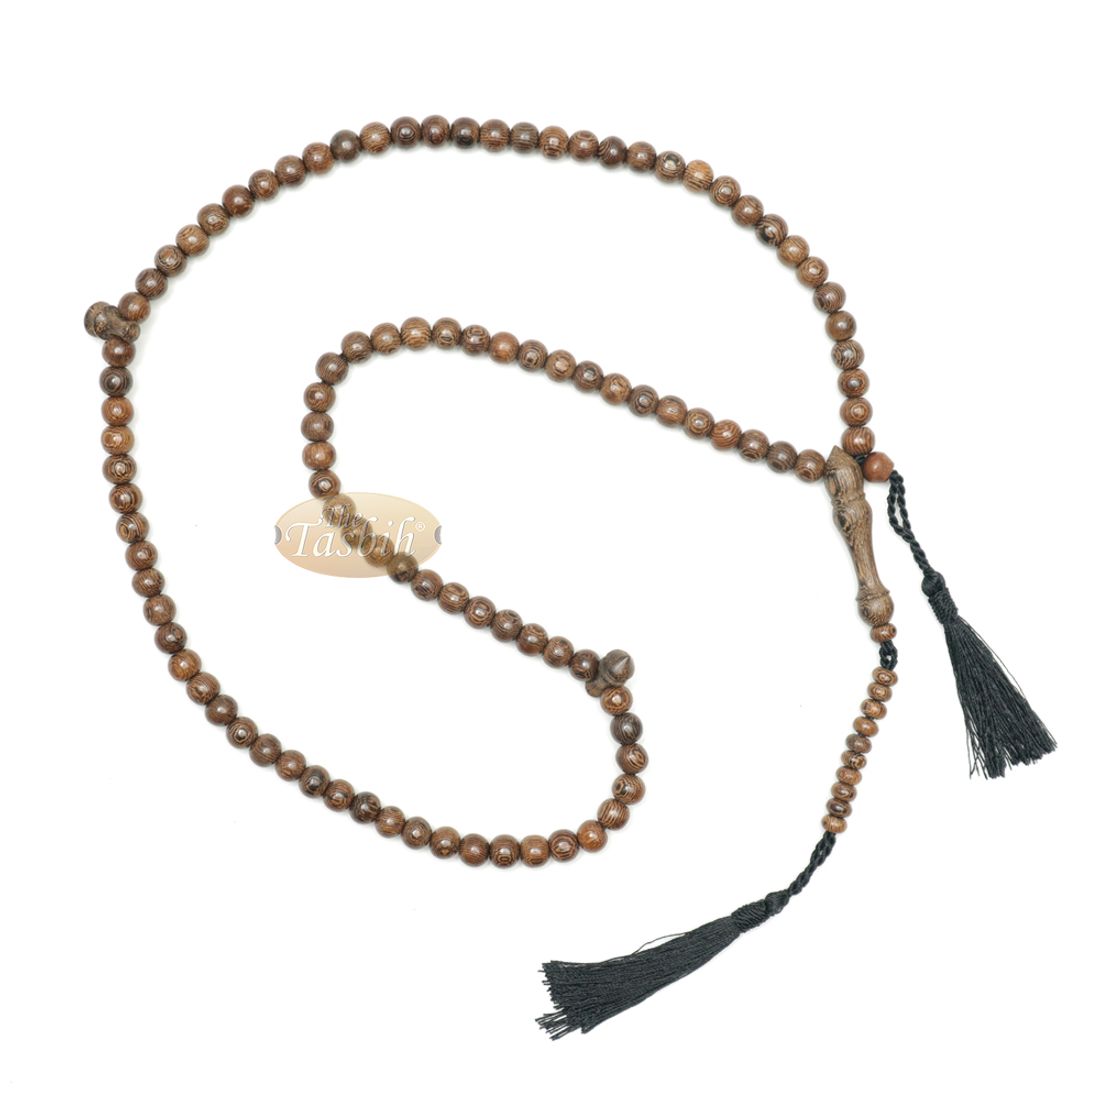 Wooden Islamic Prayer Beads – Natural Johar Tasbih 99 ct Round 8mm Beads with Black Tassels